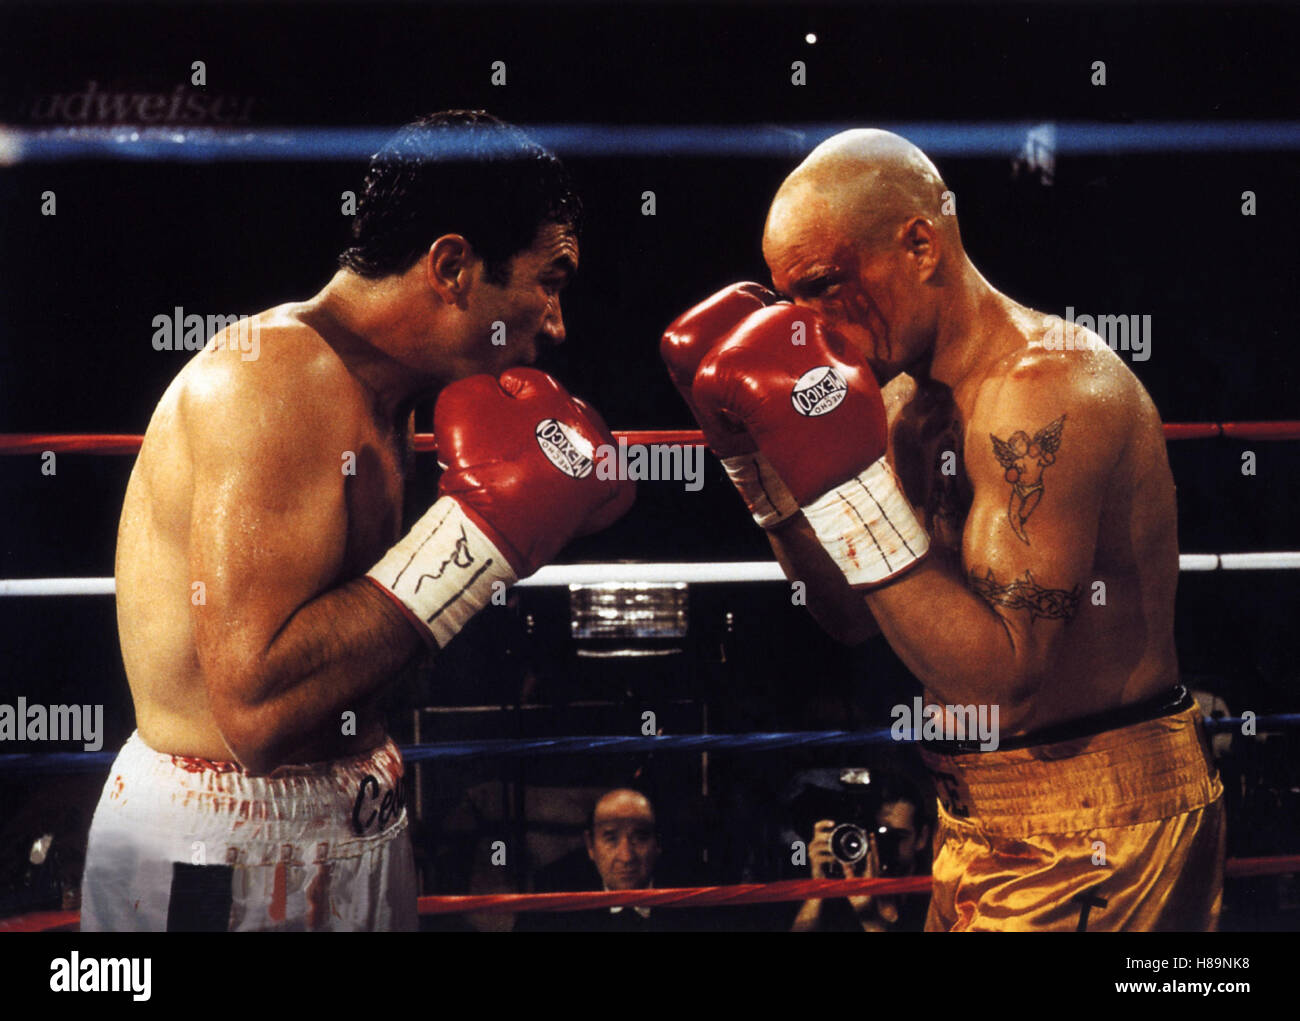 Knocked Out - Eine schlagkräftige Freundschaft, (PLAY IT TO THE BONE) USA 1999, Regie: Ron Shelton, ANTONIO BANDERAS, WOODY HARRELSON, Stichwort: Boxer, Boxhandschuh, Boxkampf, Boxring, Glatze Stock Photo